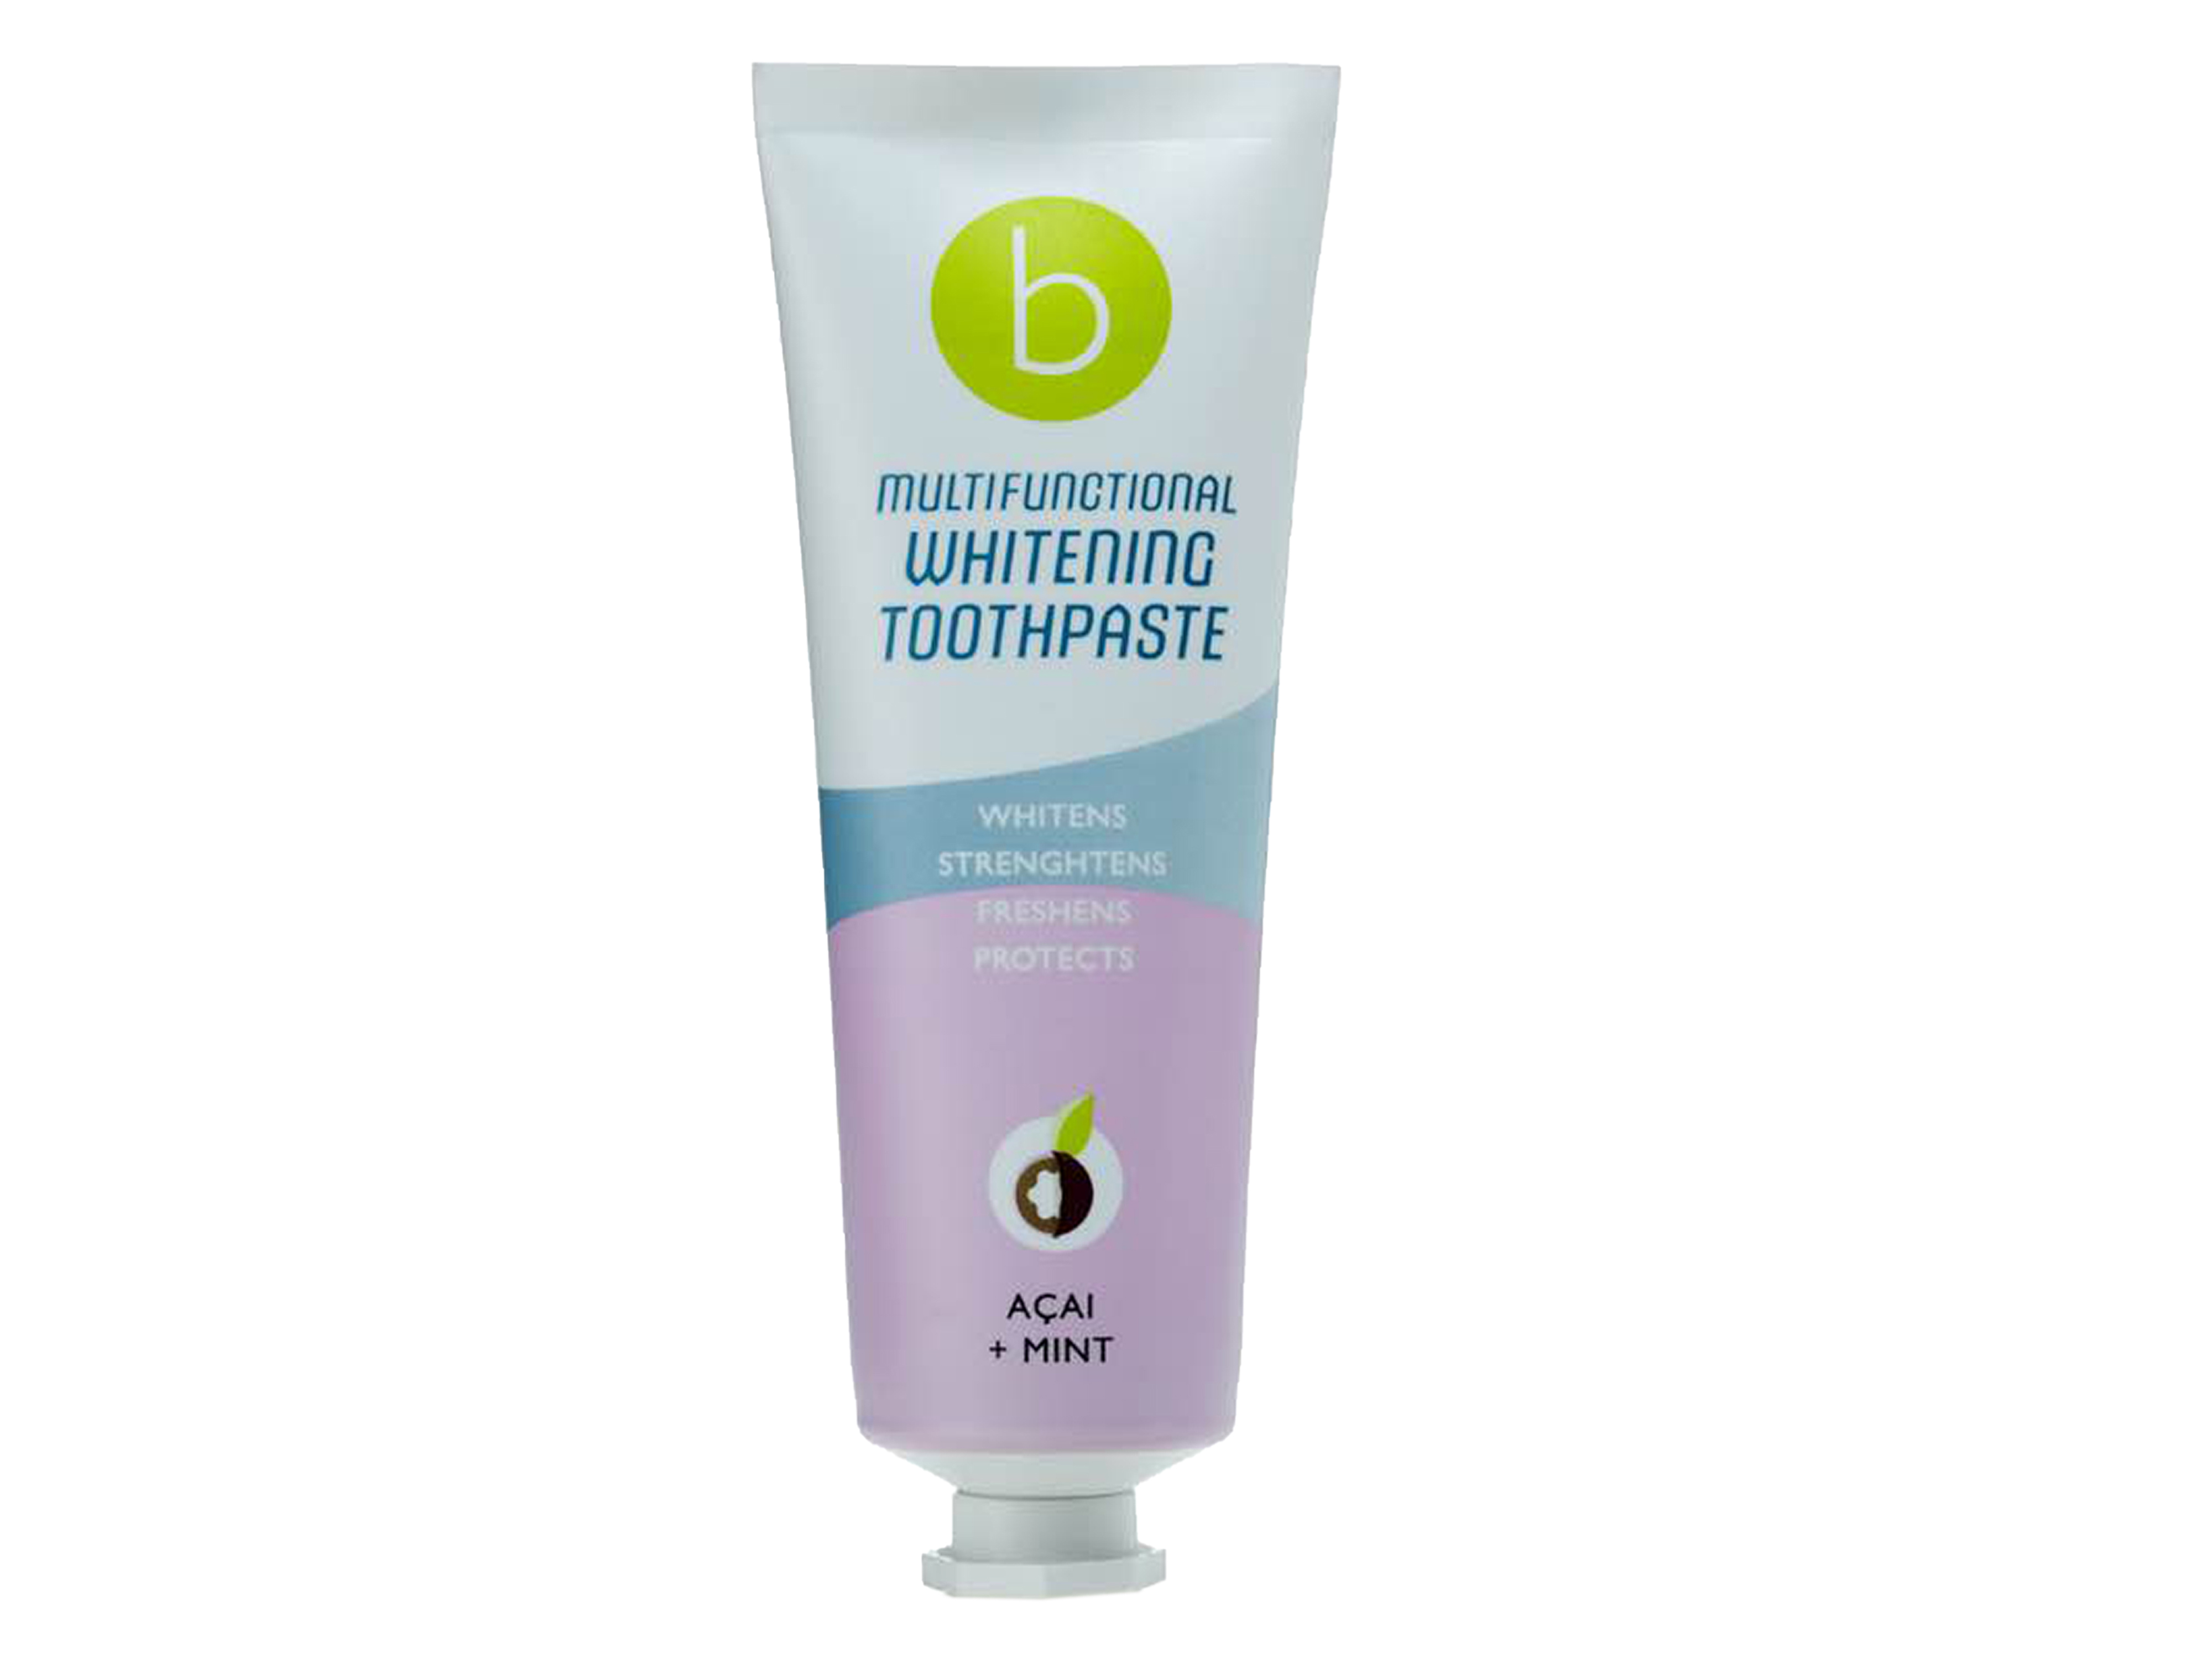 Beconfident Beconfident Multifunctional Whitening Toothpaste, acai + mint, 75